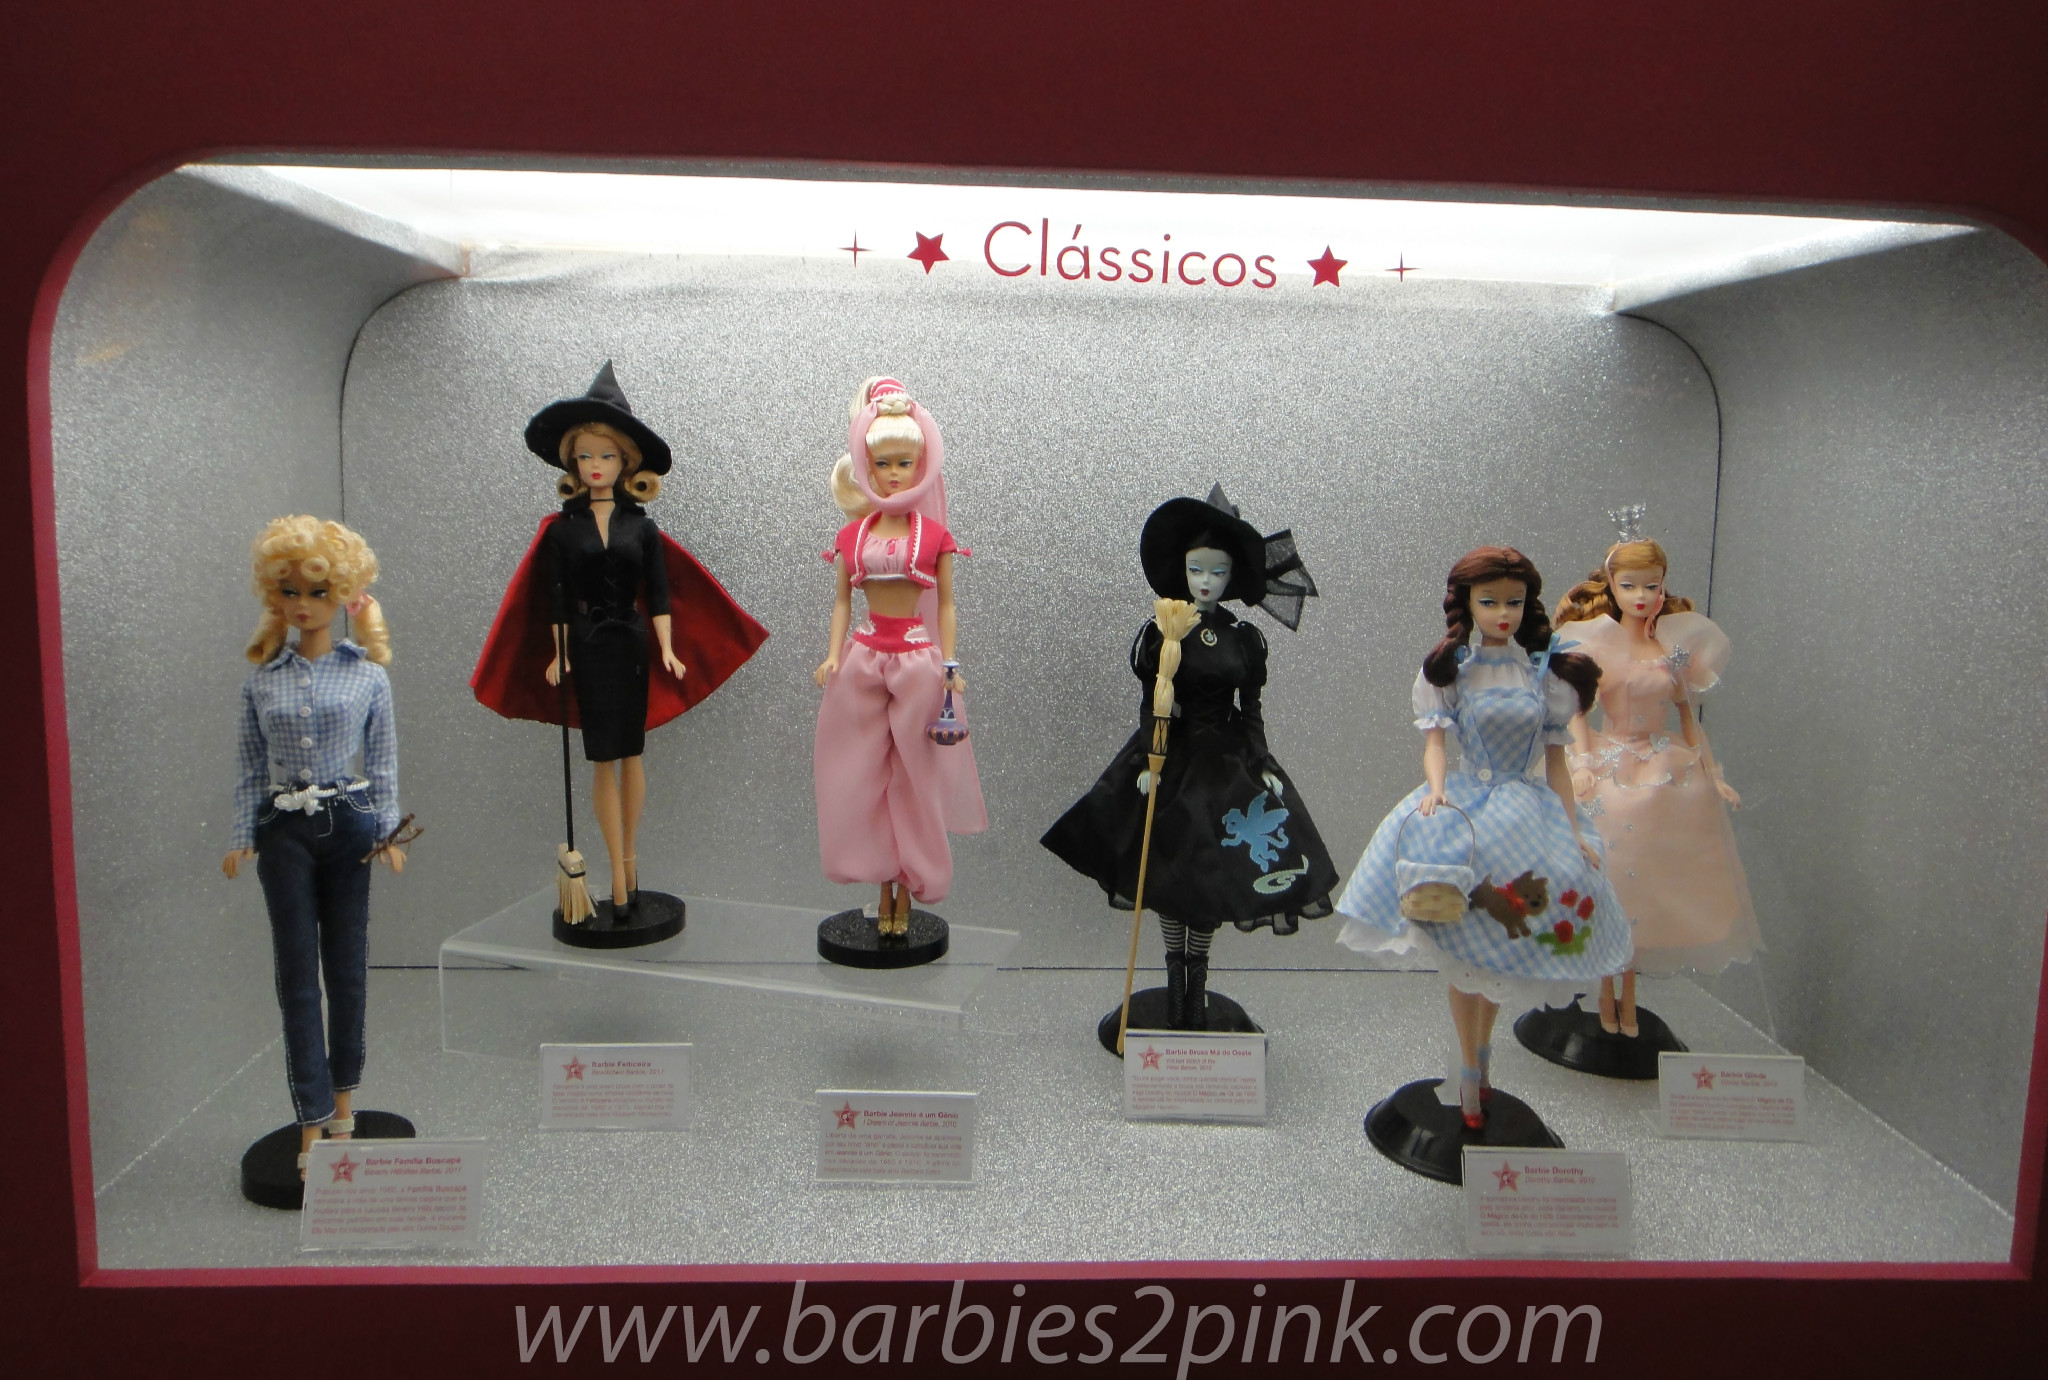 2013, Barbie S2 Pink